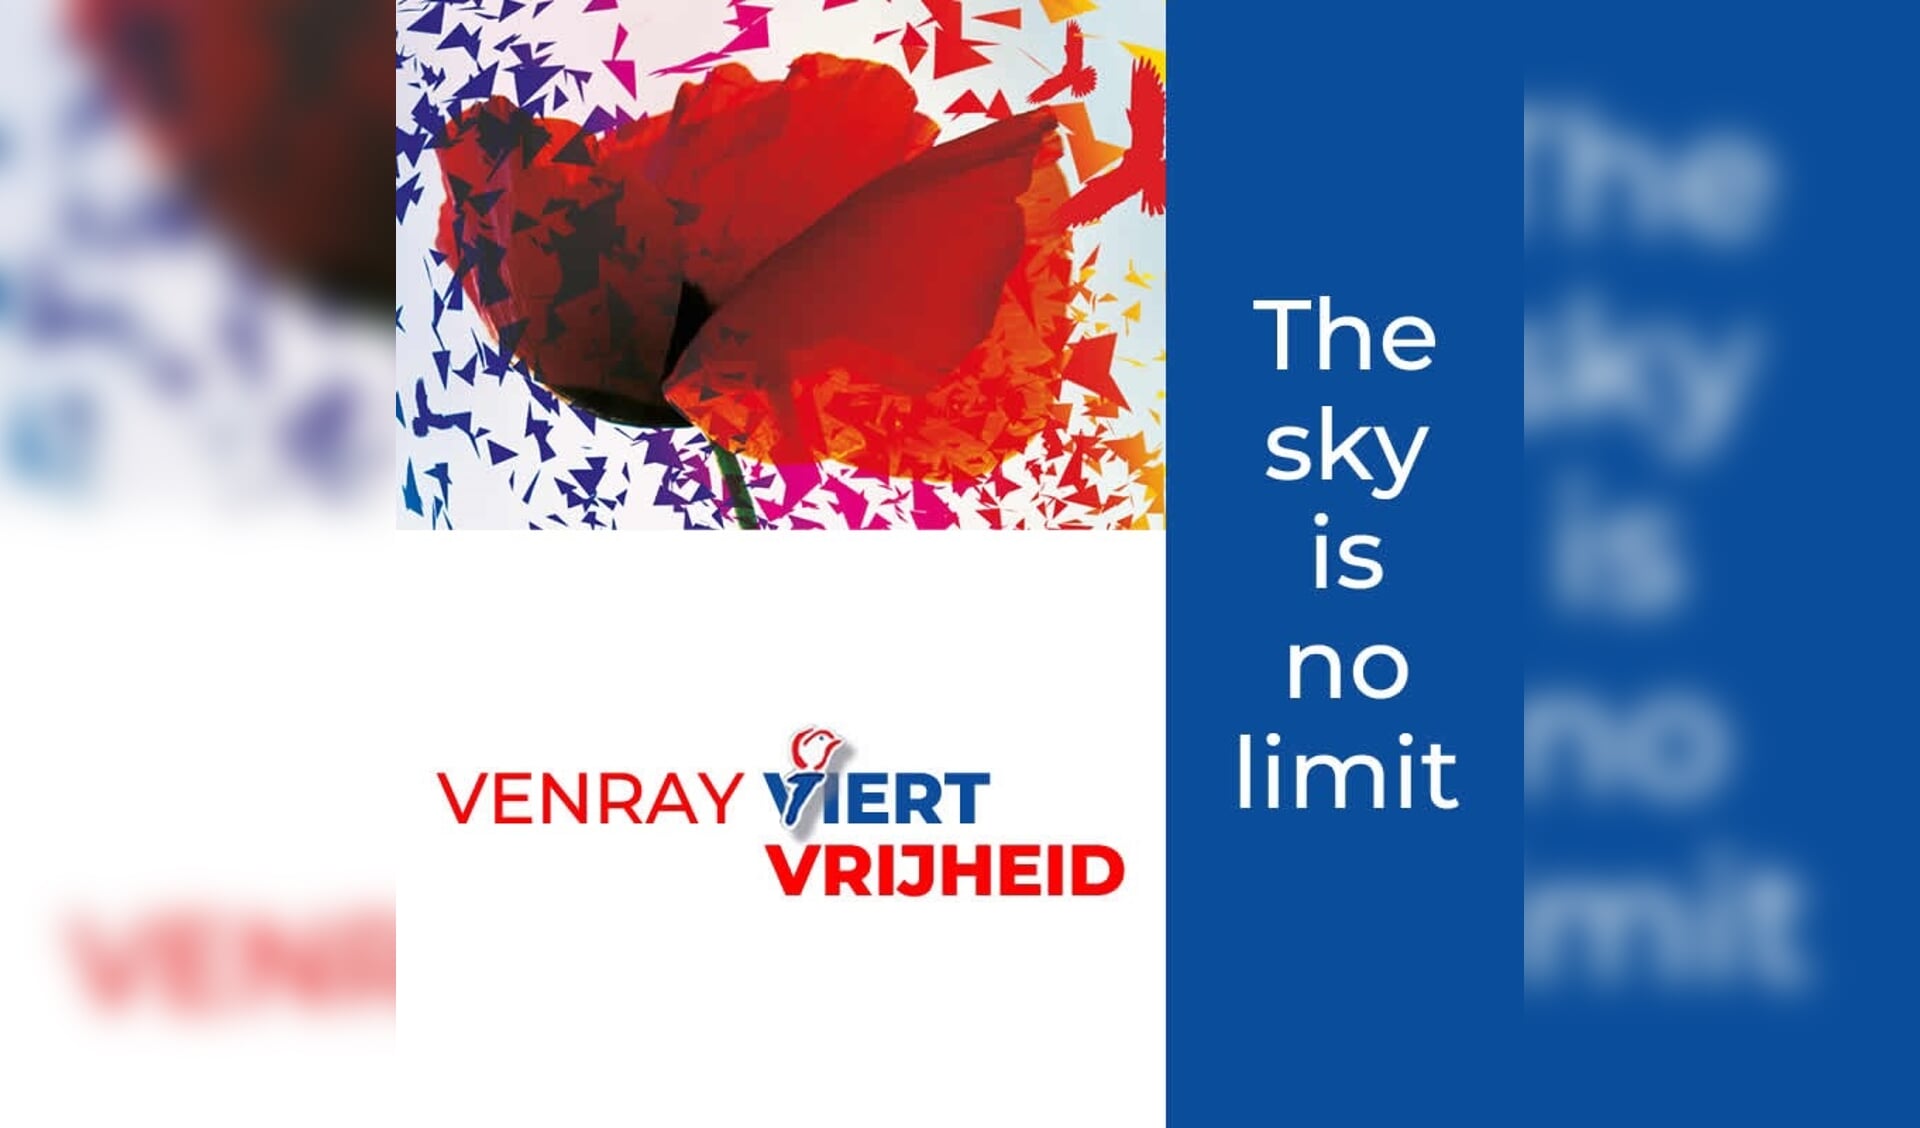 Vrijheidsfestival in Venray – The Sky is No Limit!